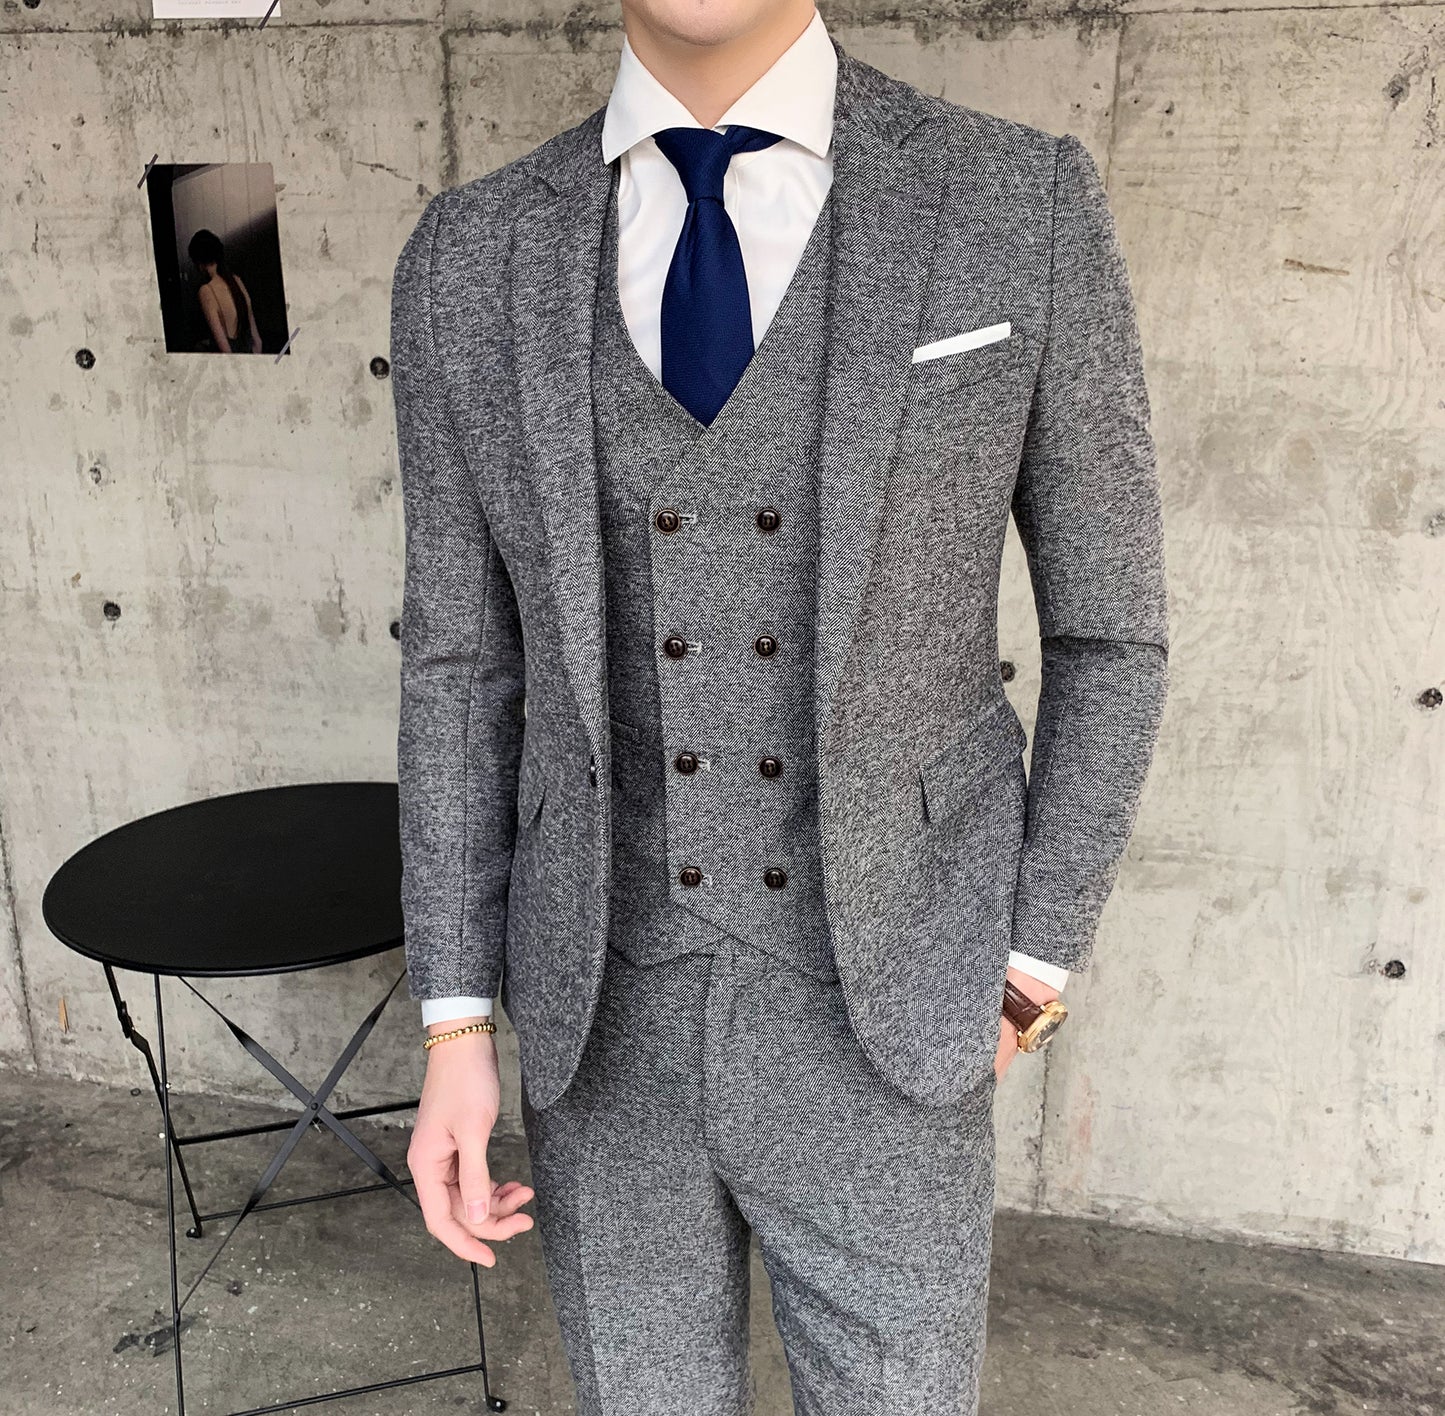 Three-piece suit for men